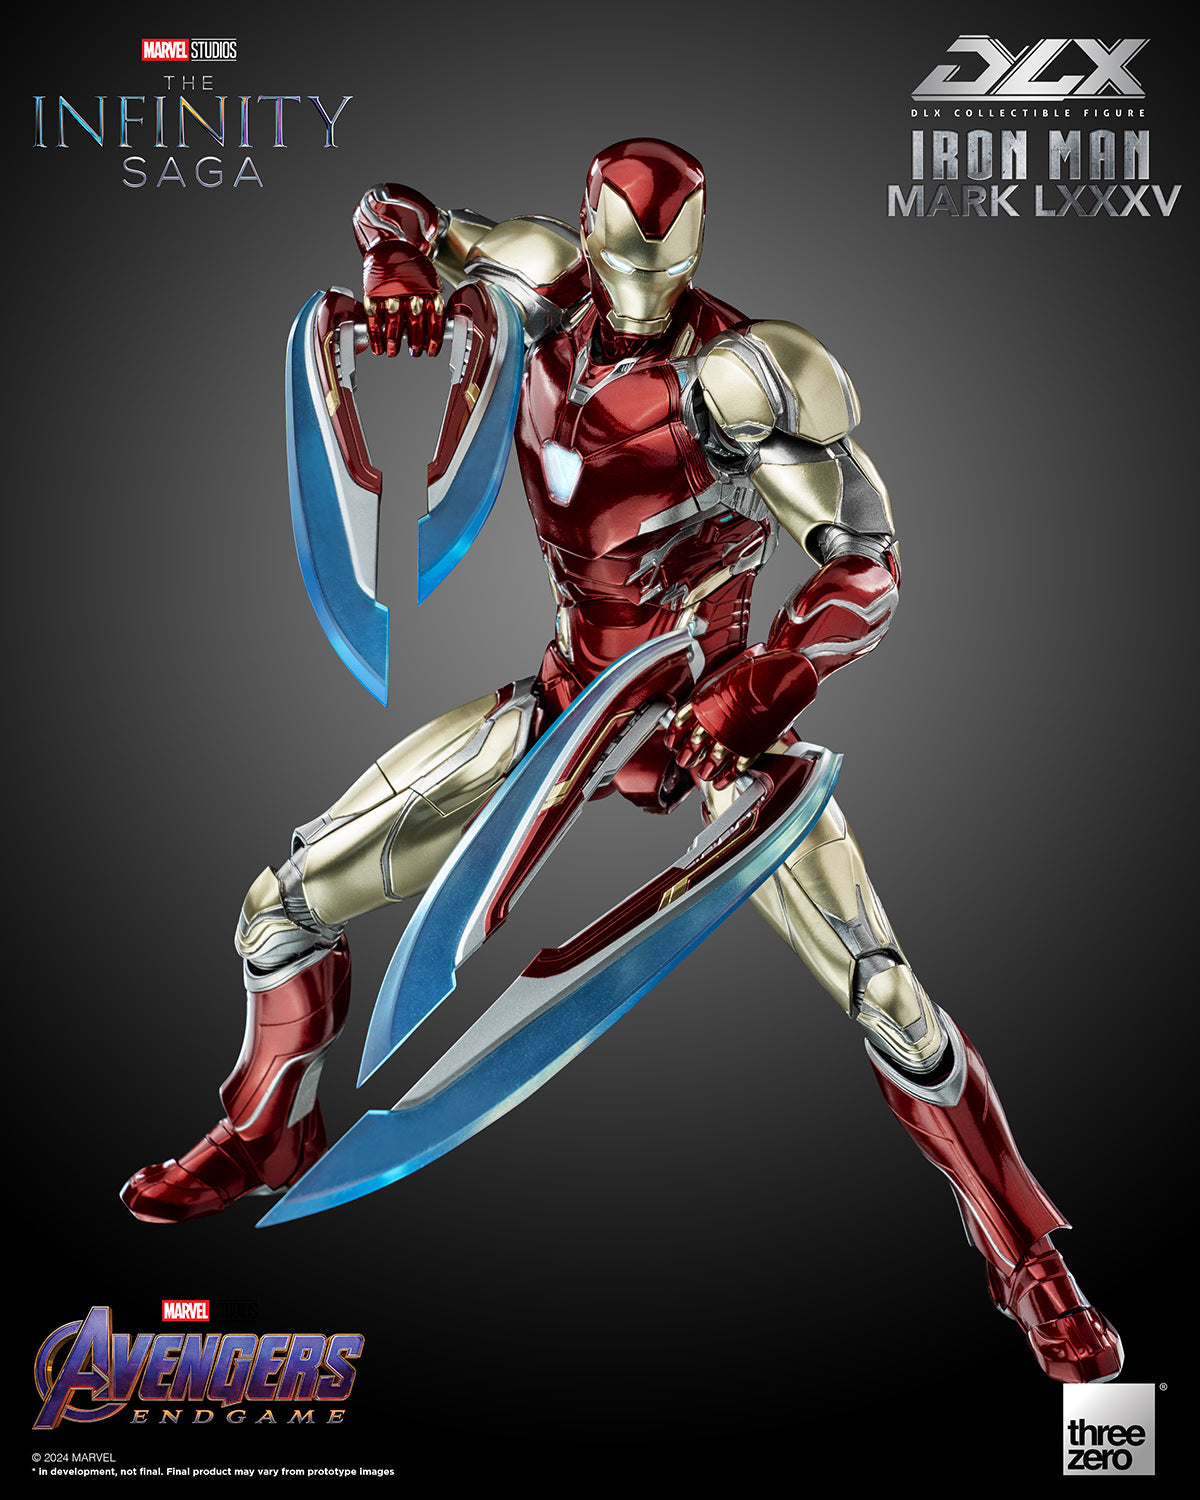 DLX Iron Man Mark 85 Collectible Figure